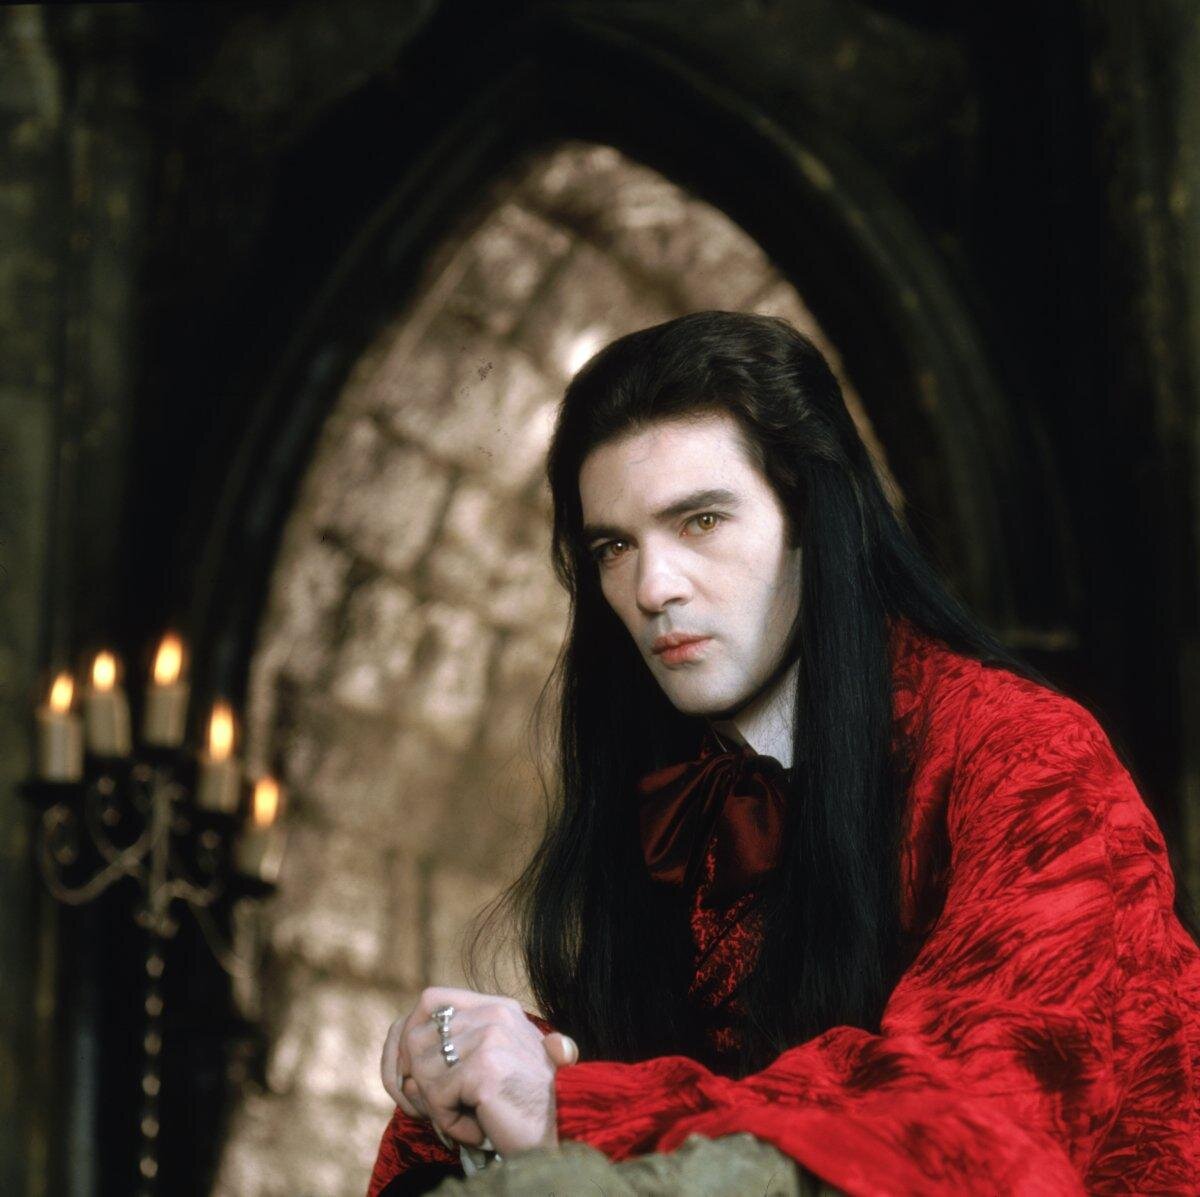 Луи де пон дю. Антонио Бандерас интервью с вампиром. Интервью с вампиром 1994 Луи де Пон дю.